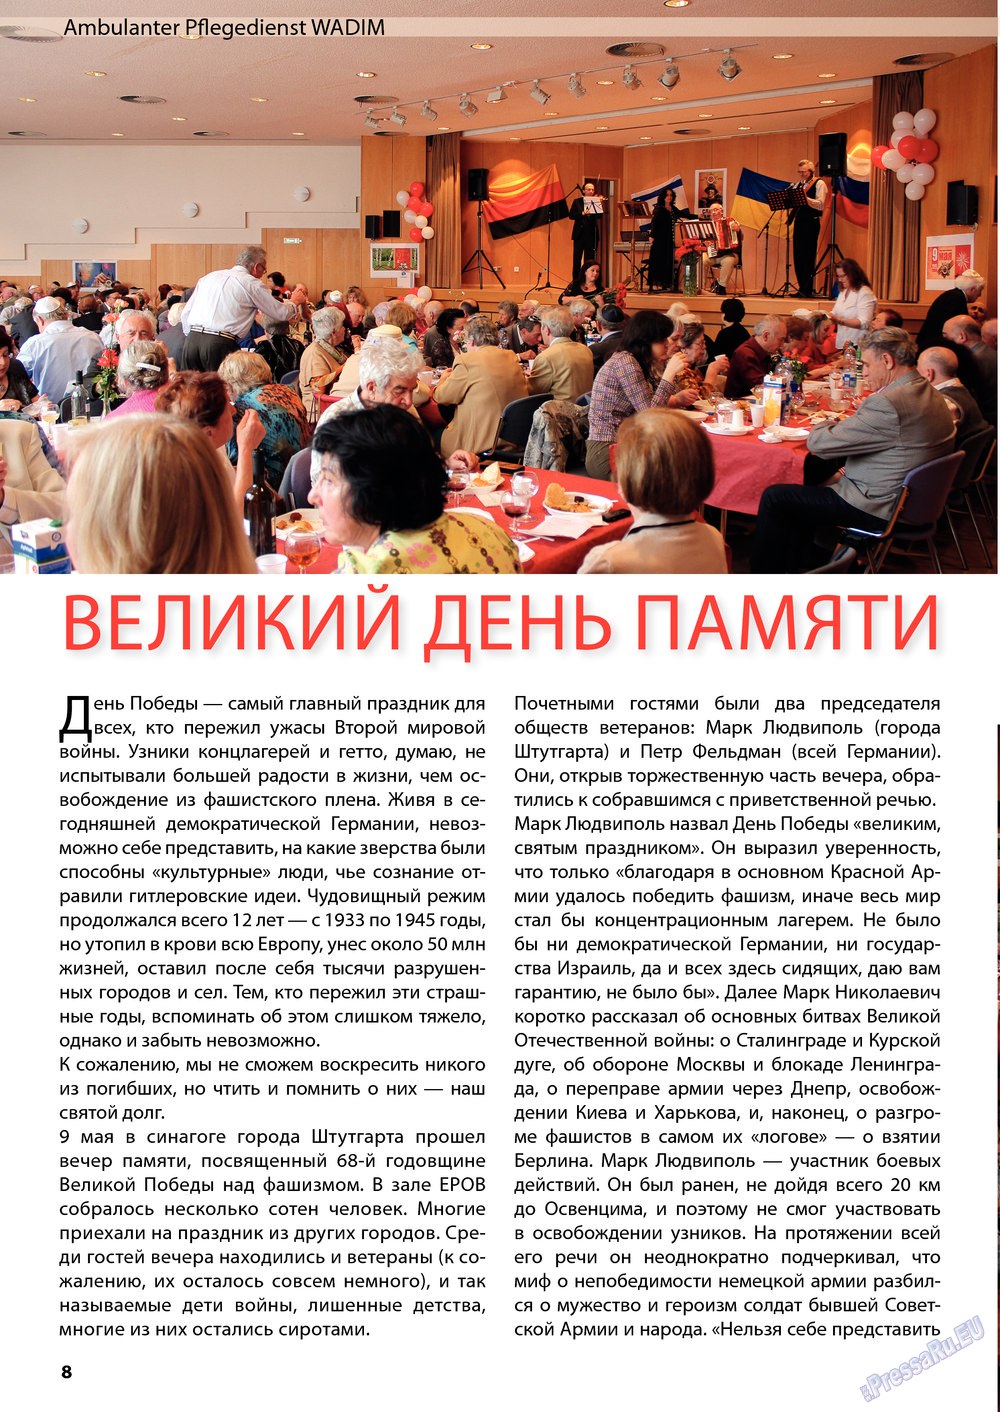 Wadim, журнал. 2013 №6 стр.8